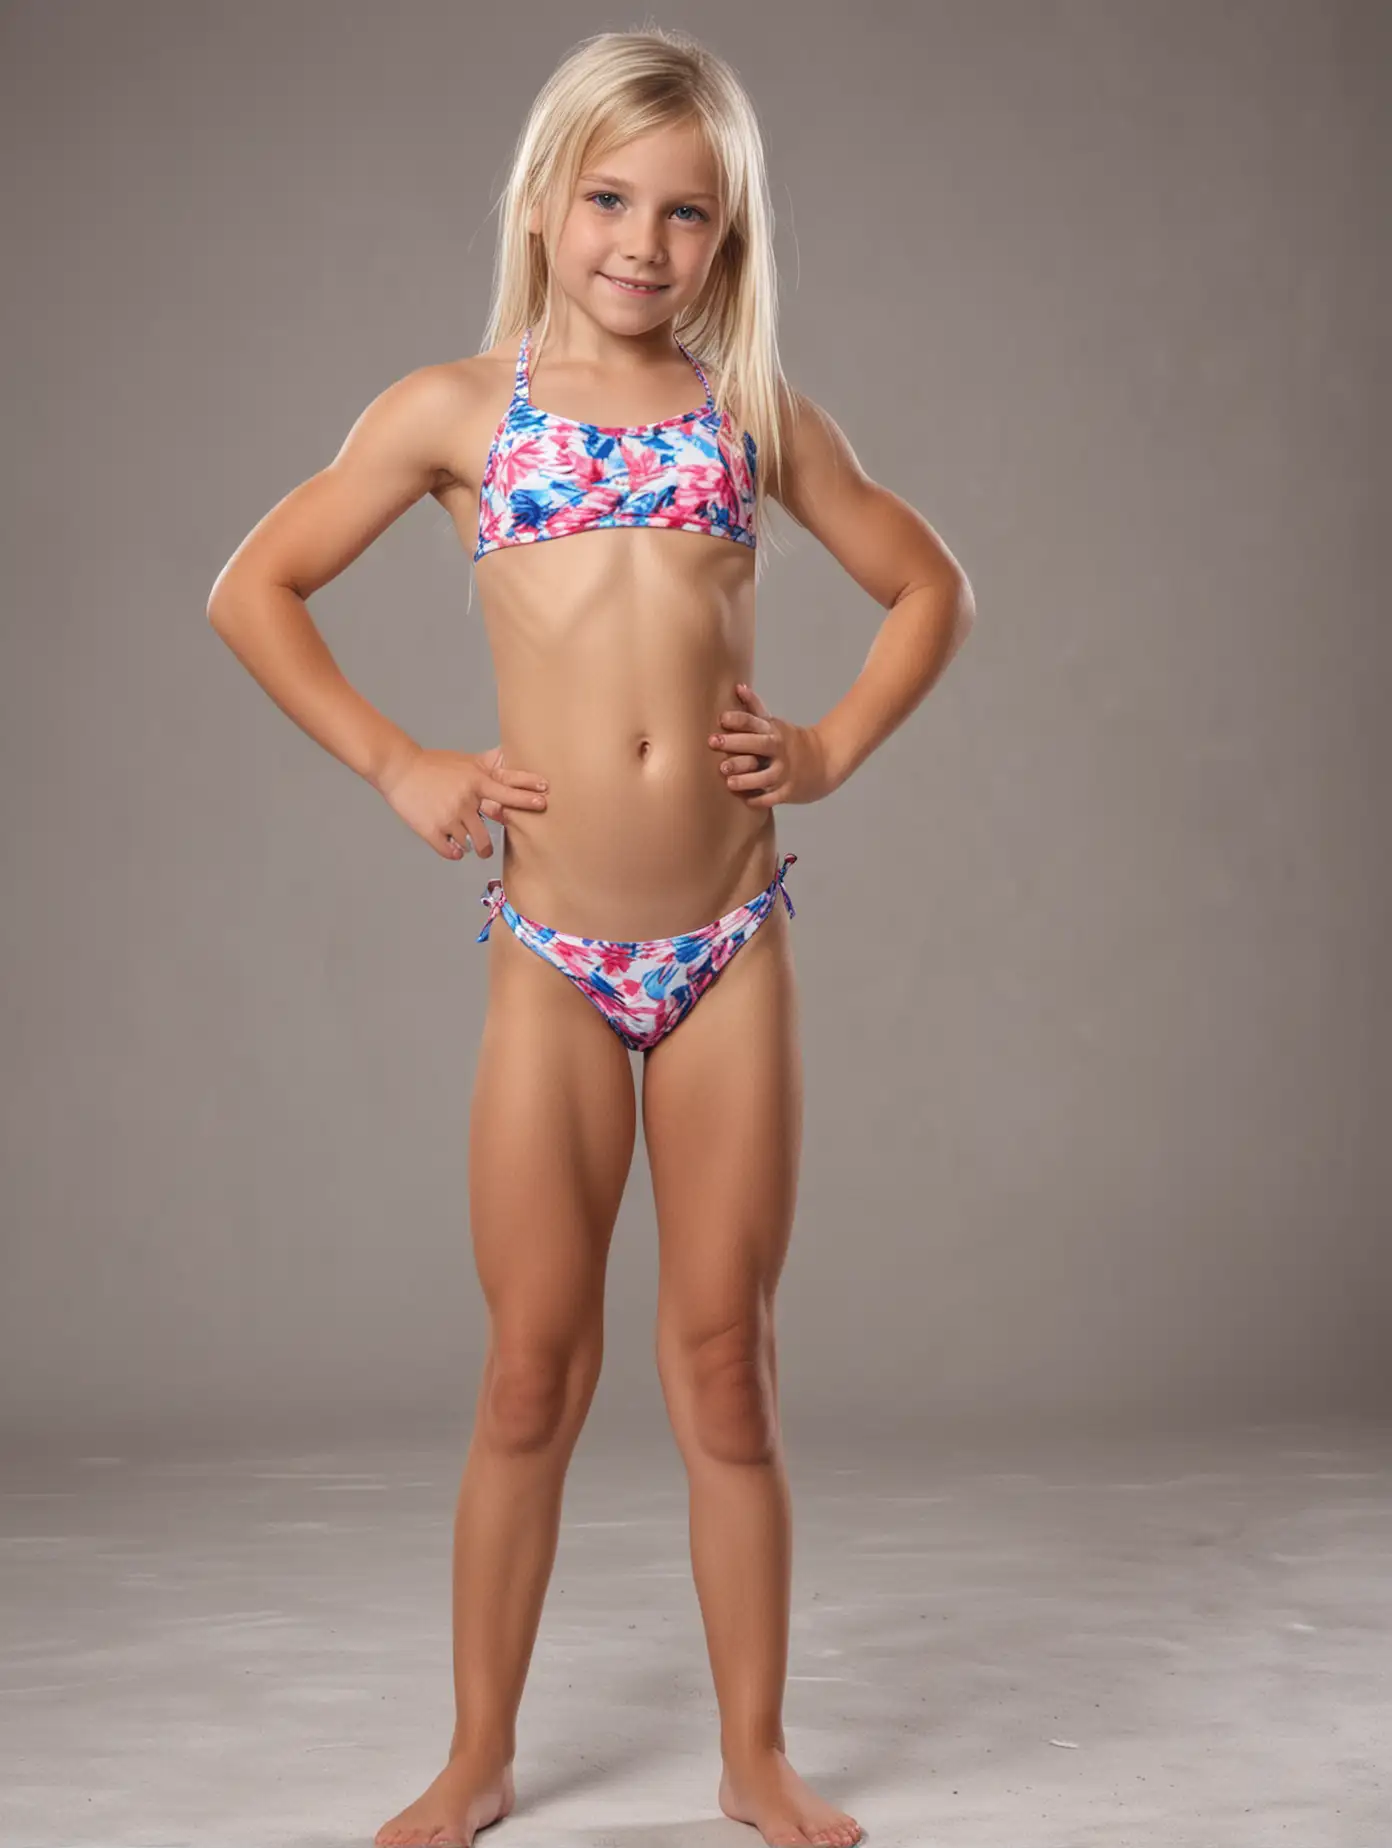 Athletic-Young-Girl-Flexing-Muscles-in-Bikini